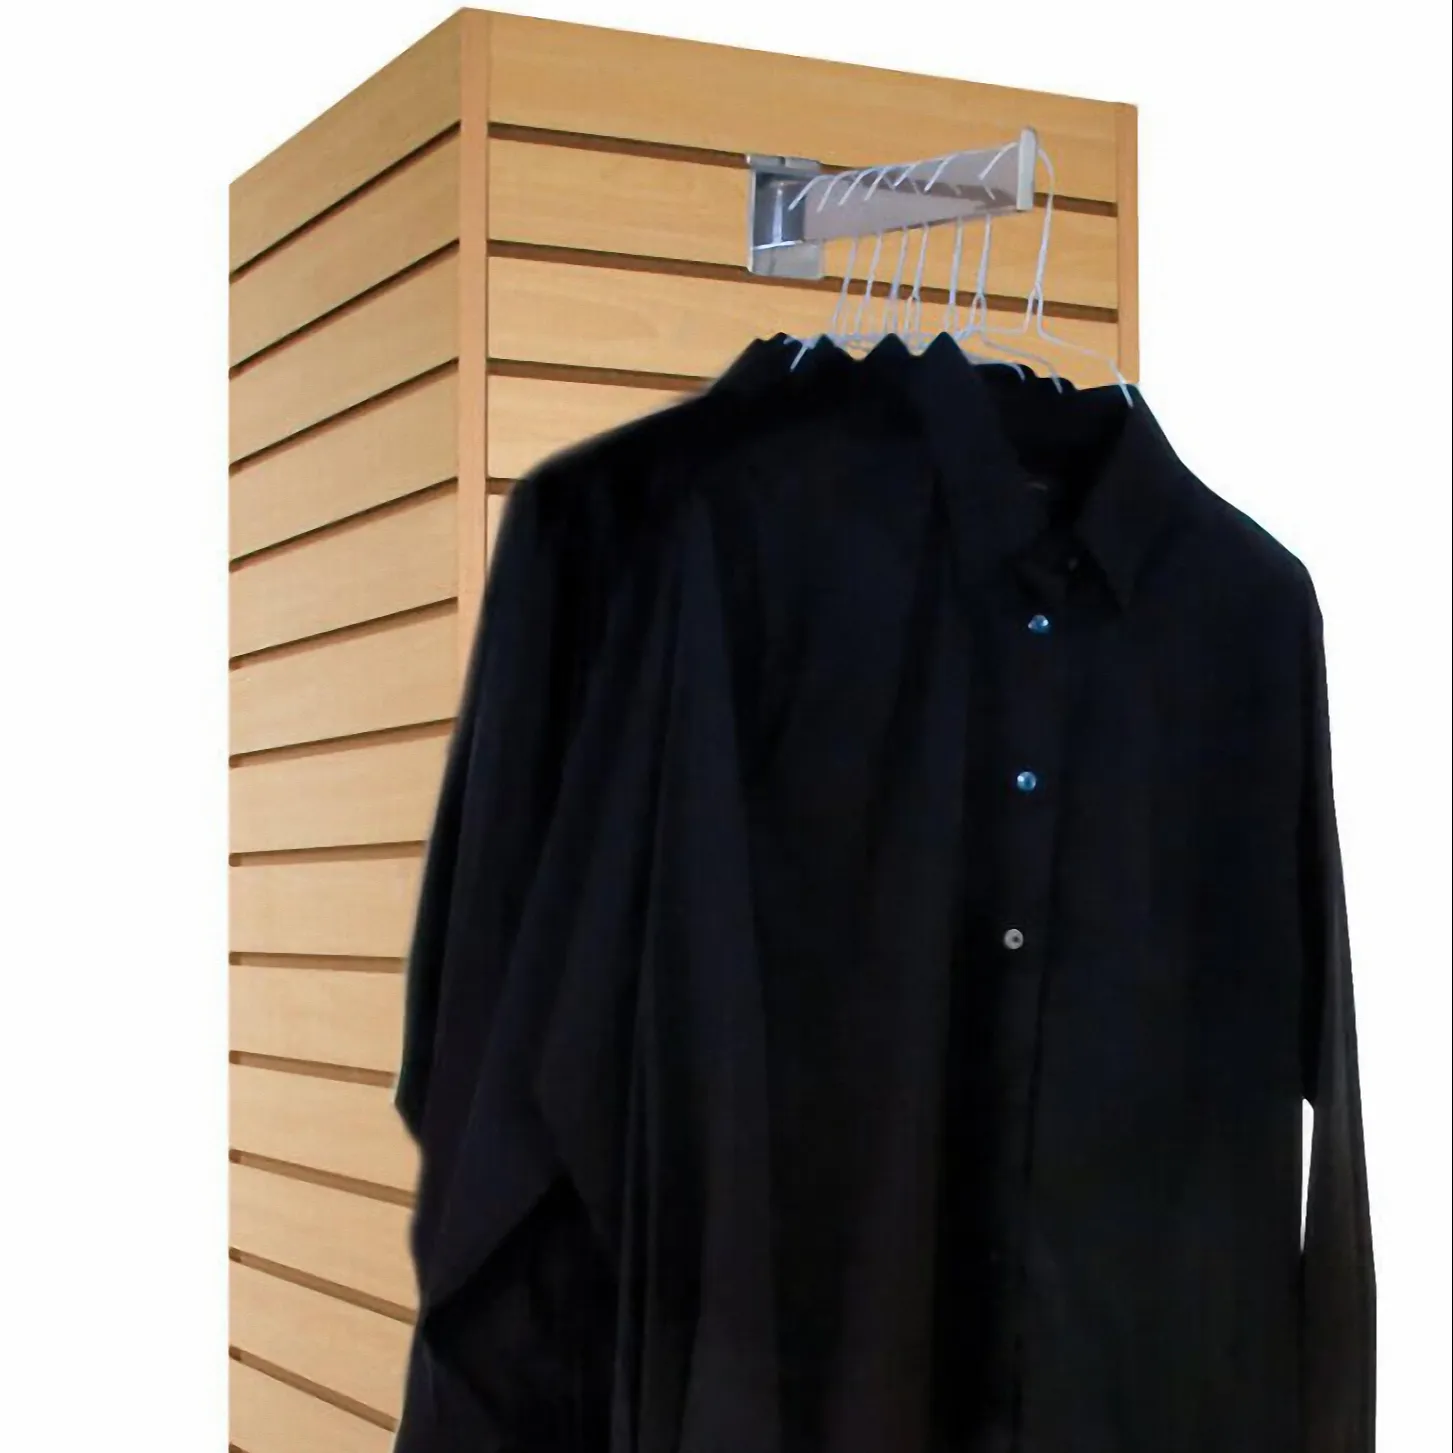 Kapok Panel High quality customized clothing stores display cabinets Kapok